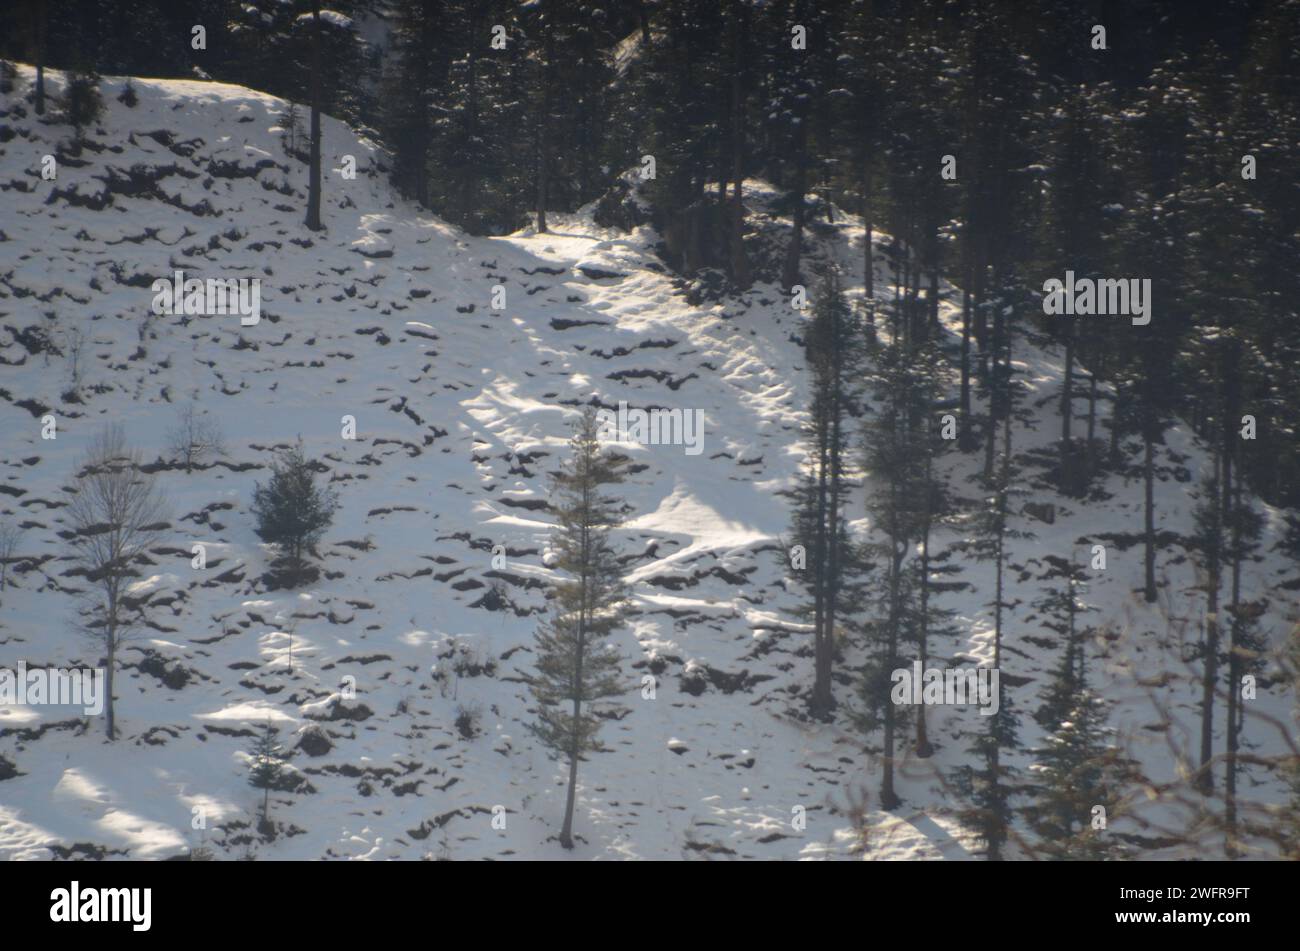 Beautiful clicks after heavy snowfalls in villages, snowfalls images, Stock Photo